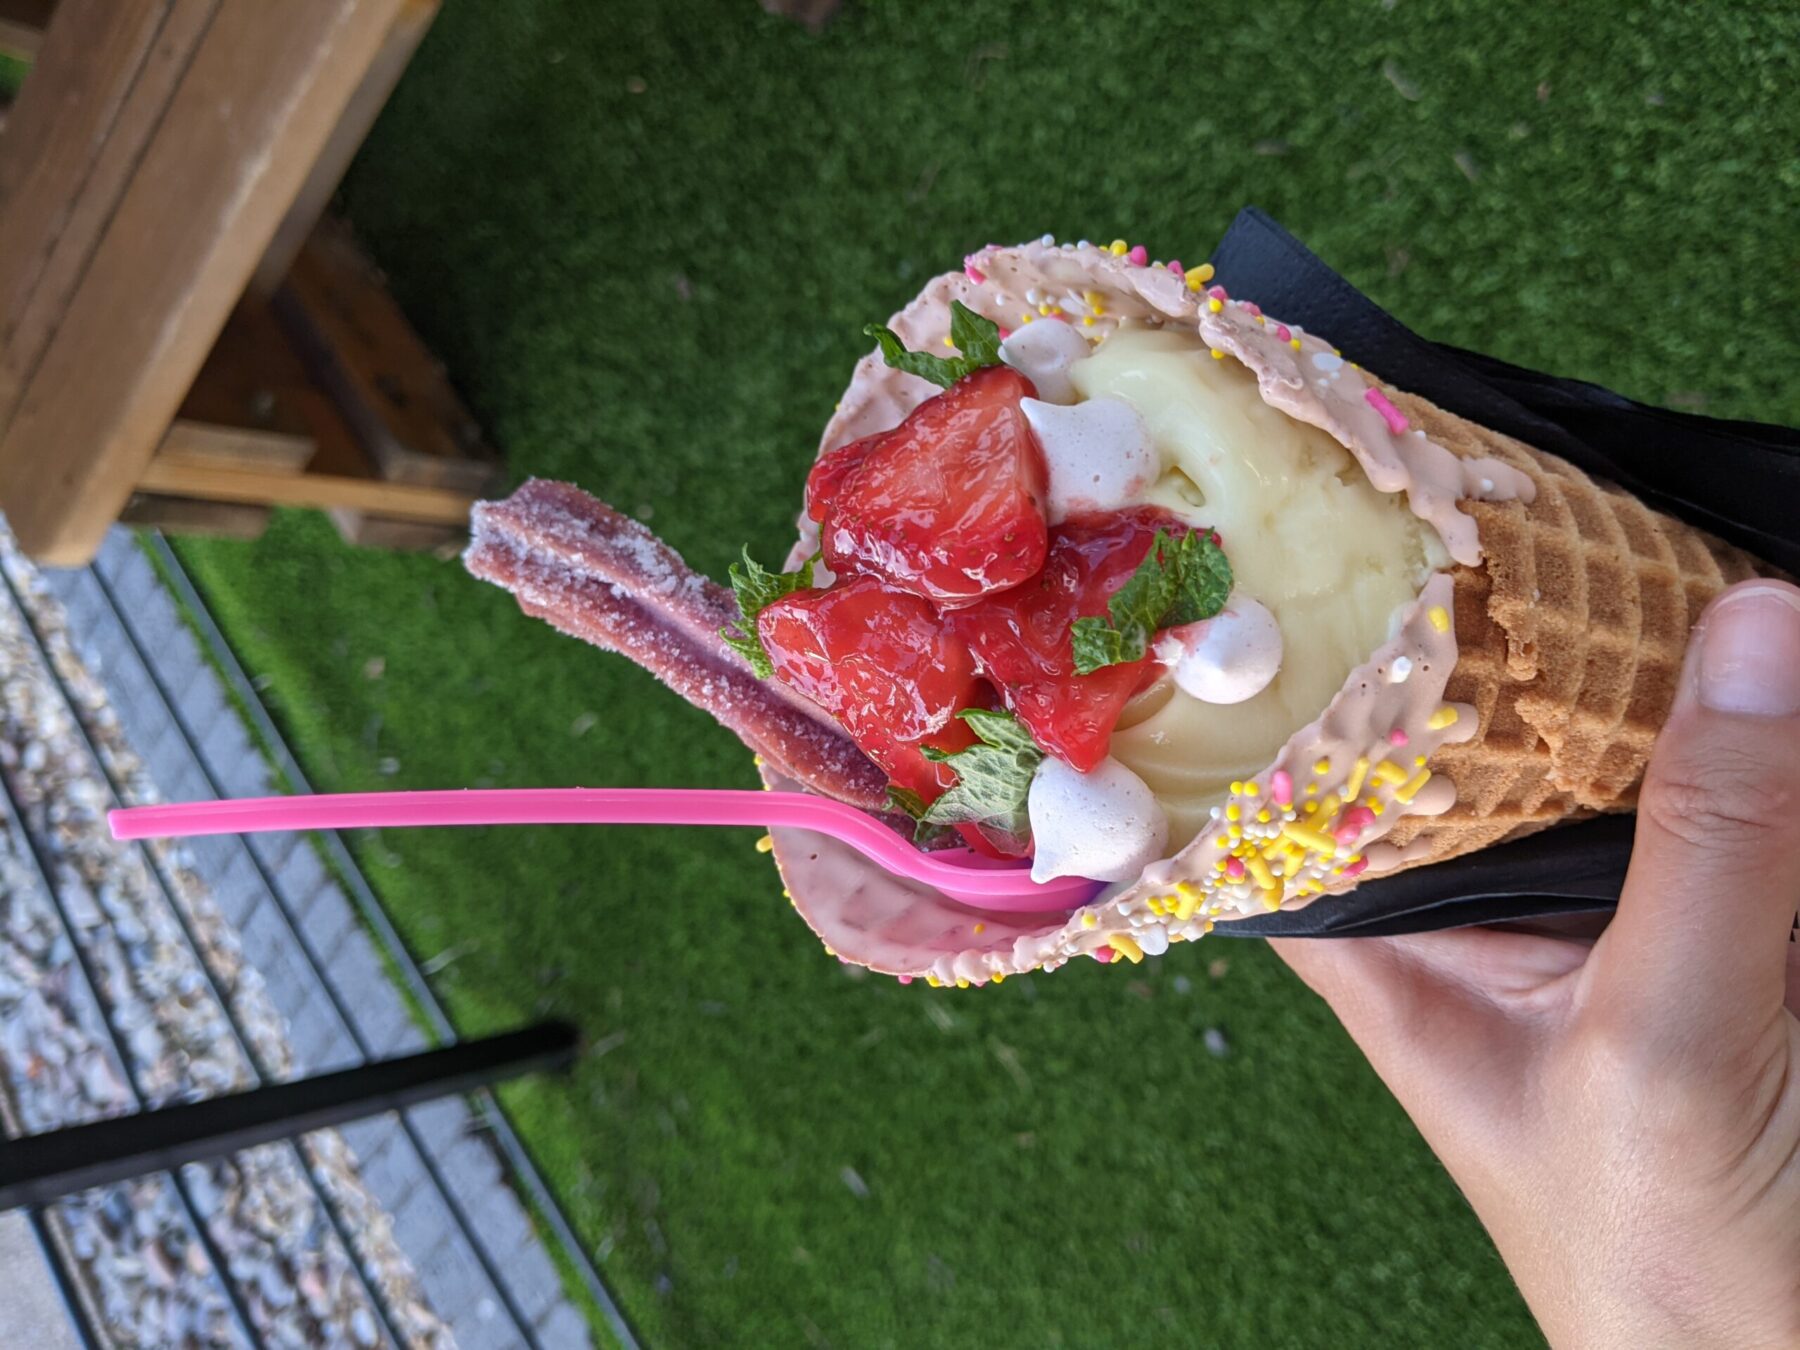 ice cream cone, strawberries, austin, hand